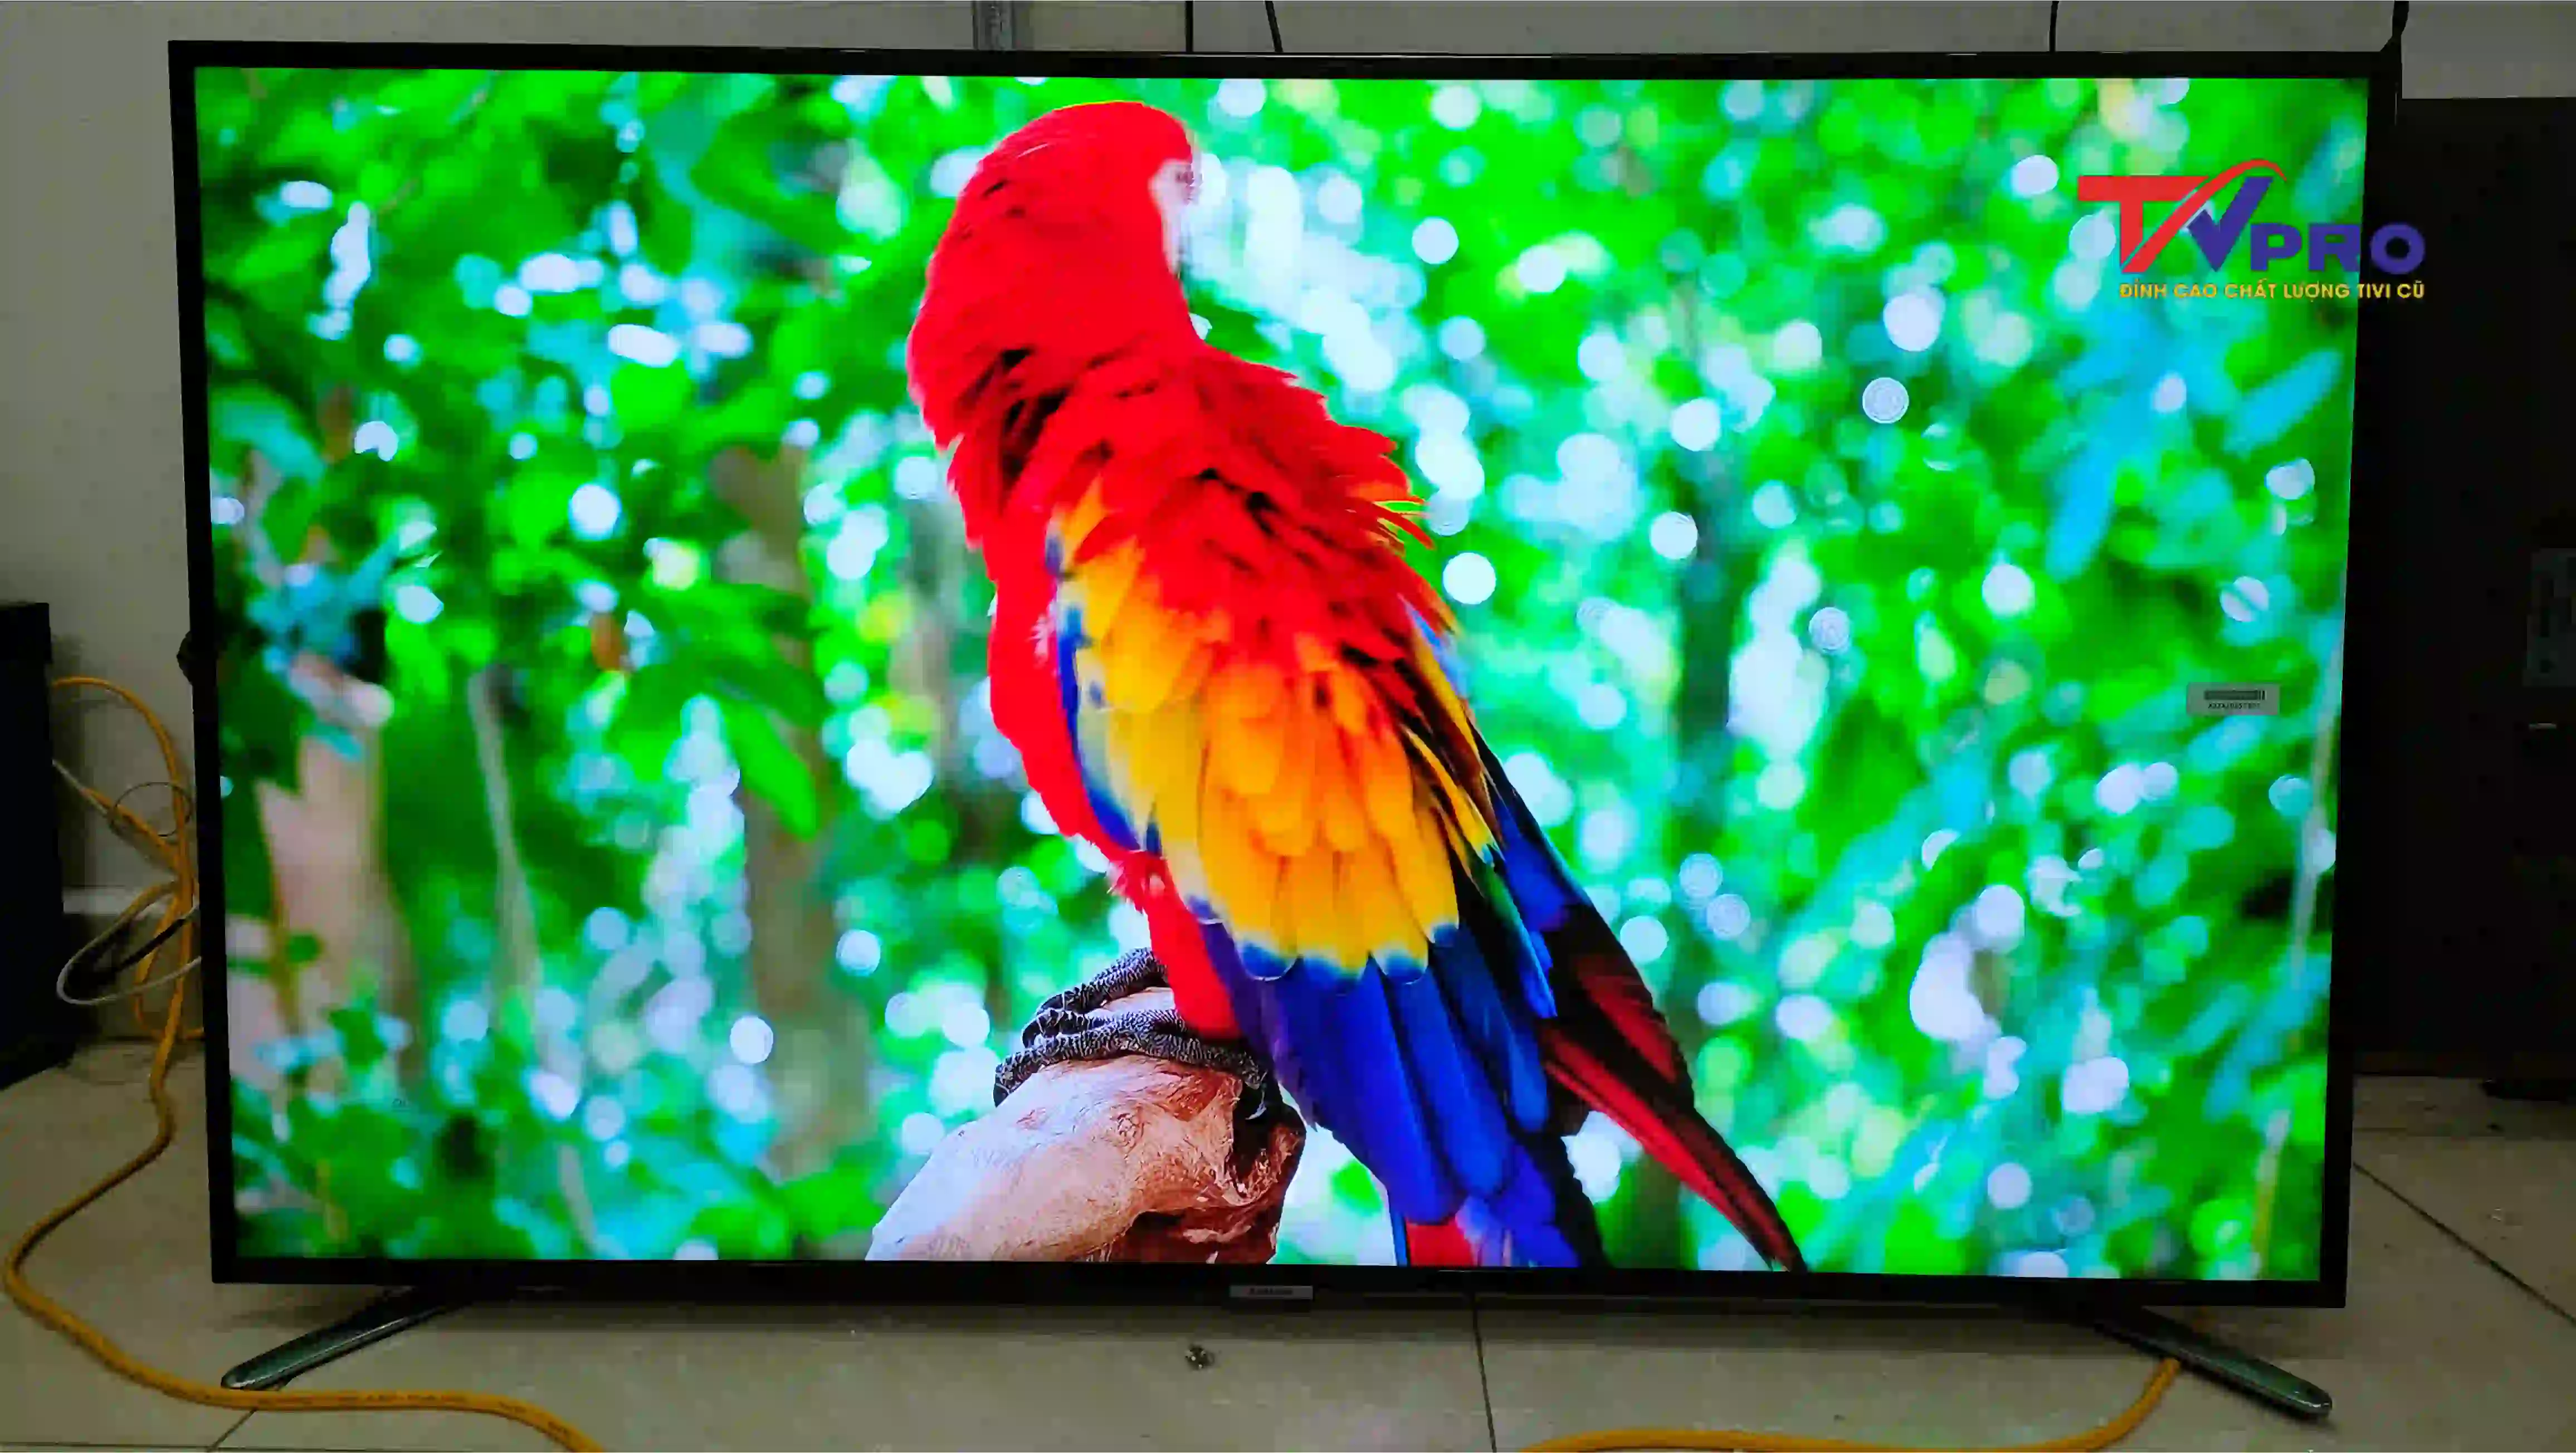  tivi Samsung UA50NU7090K cũ